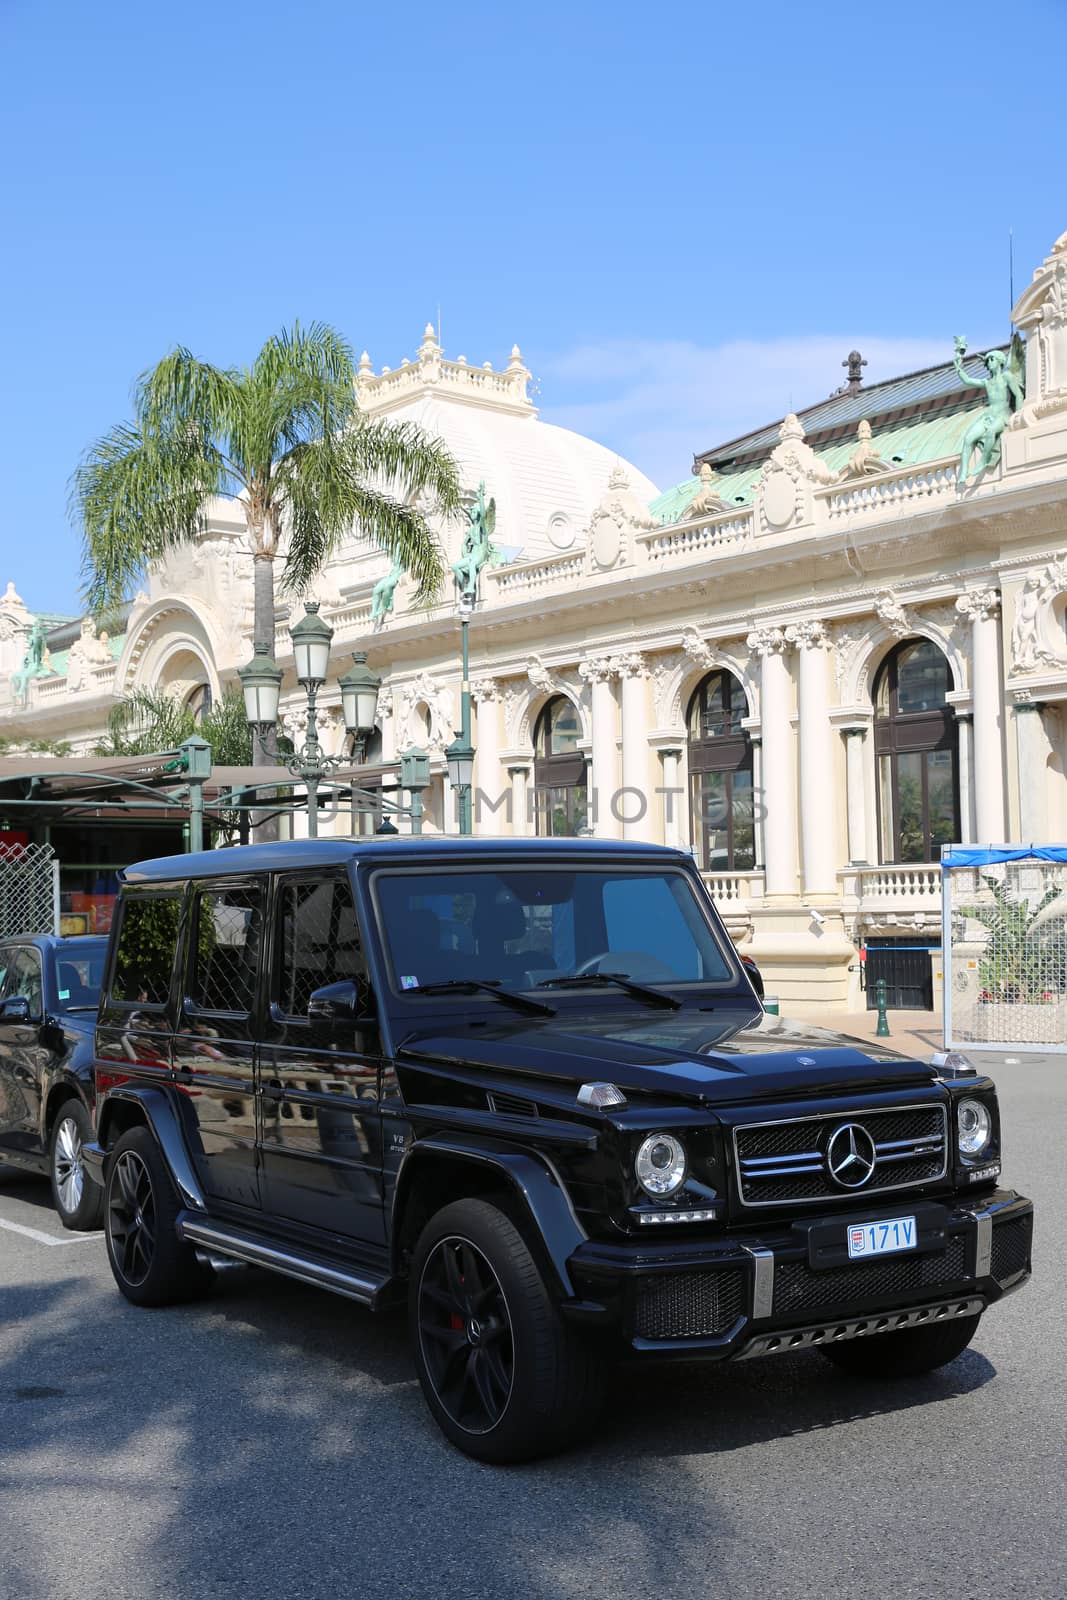 Monte-Carlo, Monaco - May 17, 2016:  Luxury Black SUV Mercedes G 63 AMG Parked in Front of the Monte-Carlo Casino in Monaco